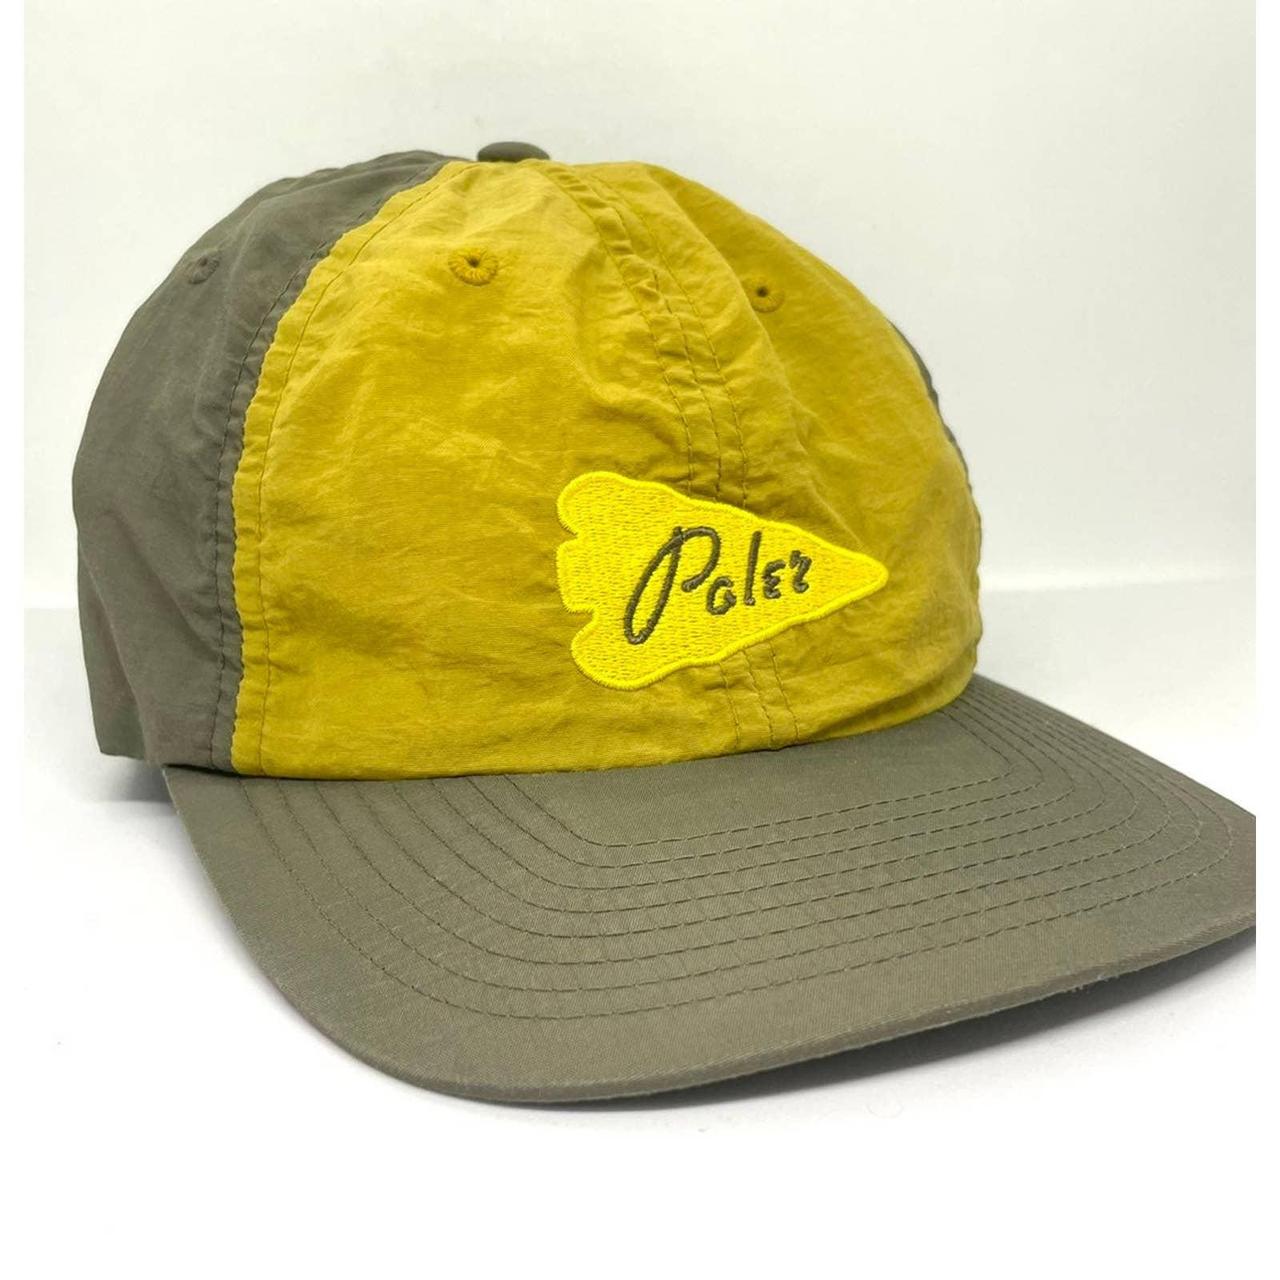 Poler Women's Yellow and Grey Hat